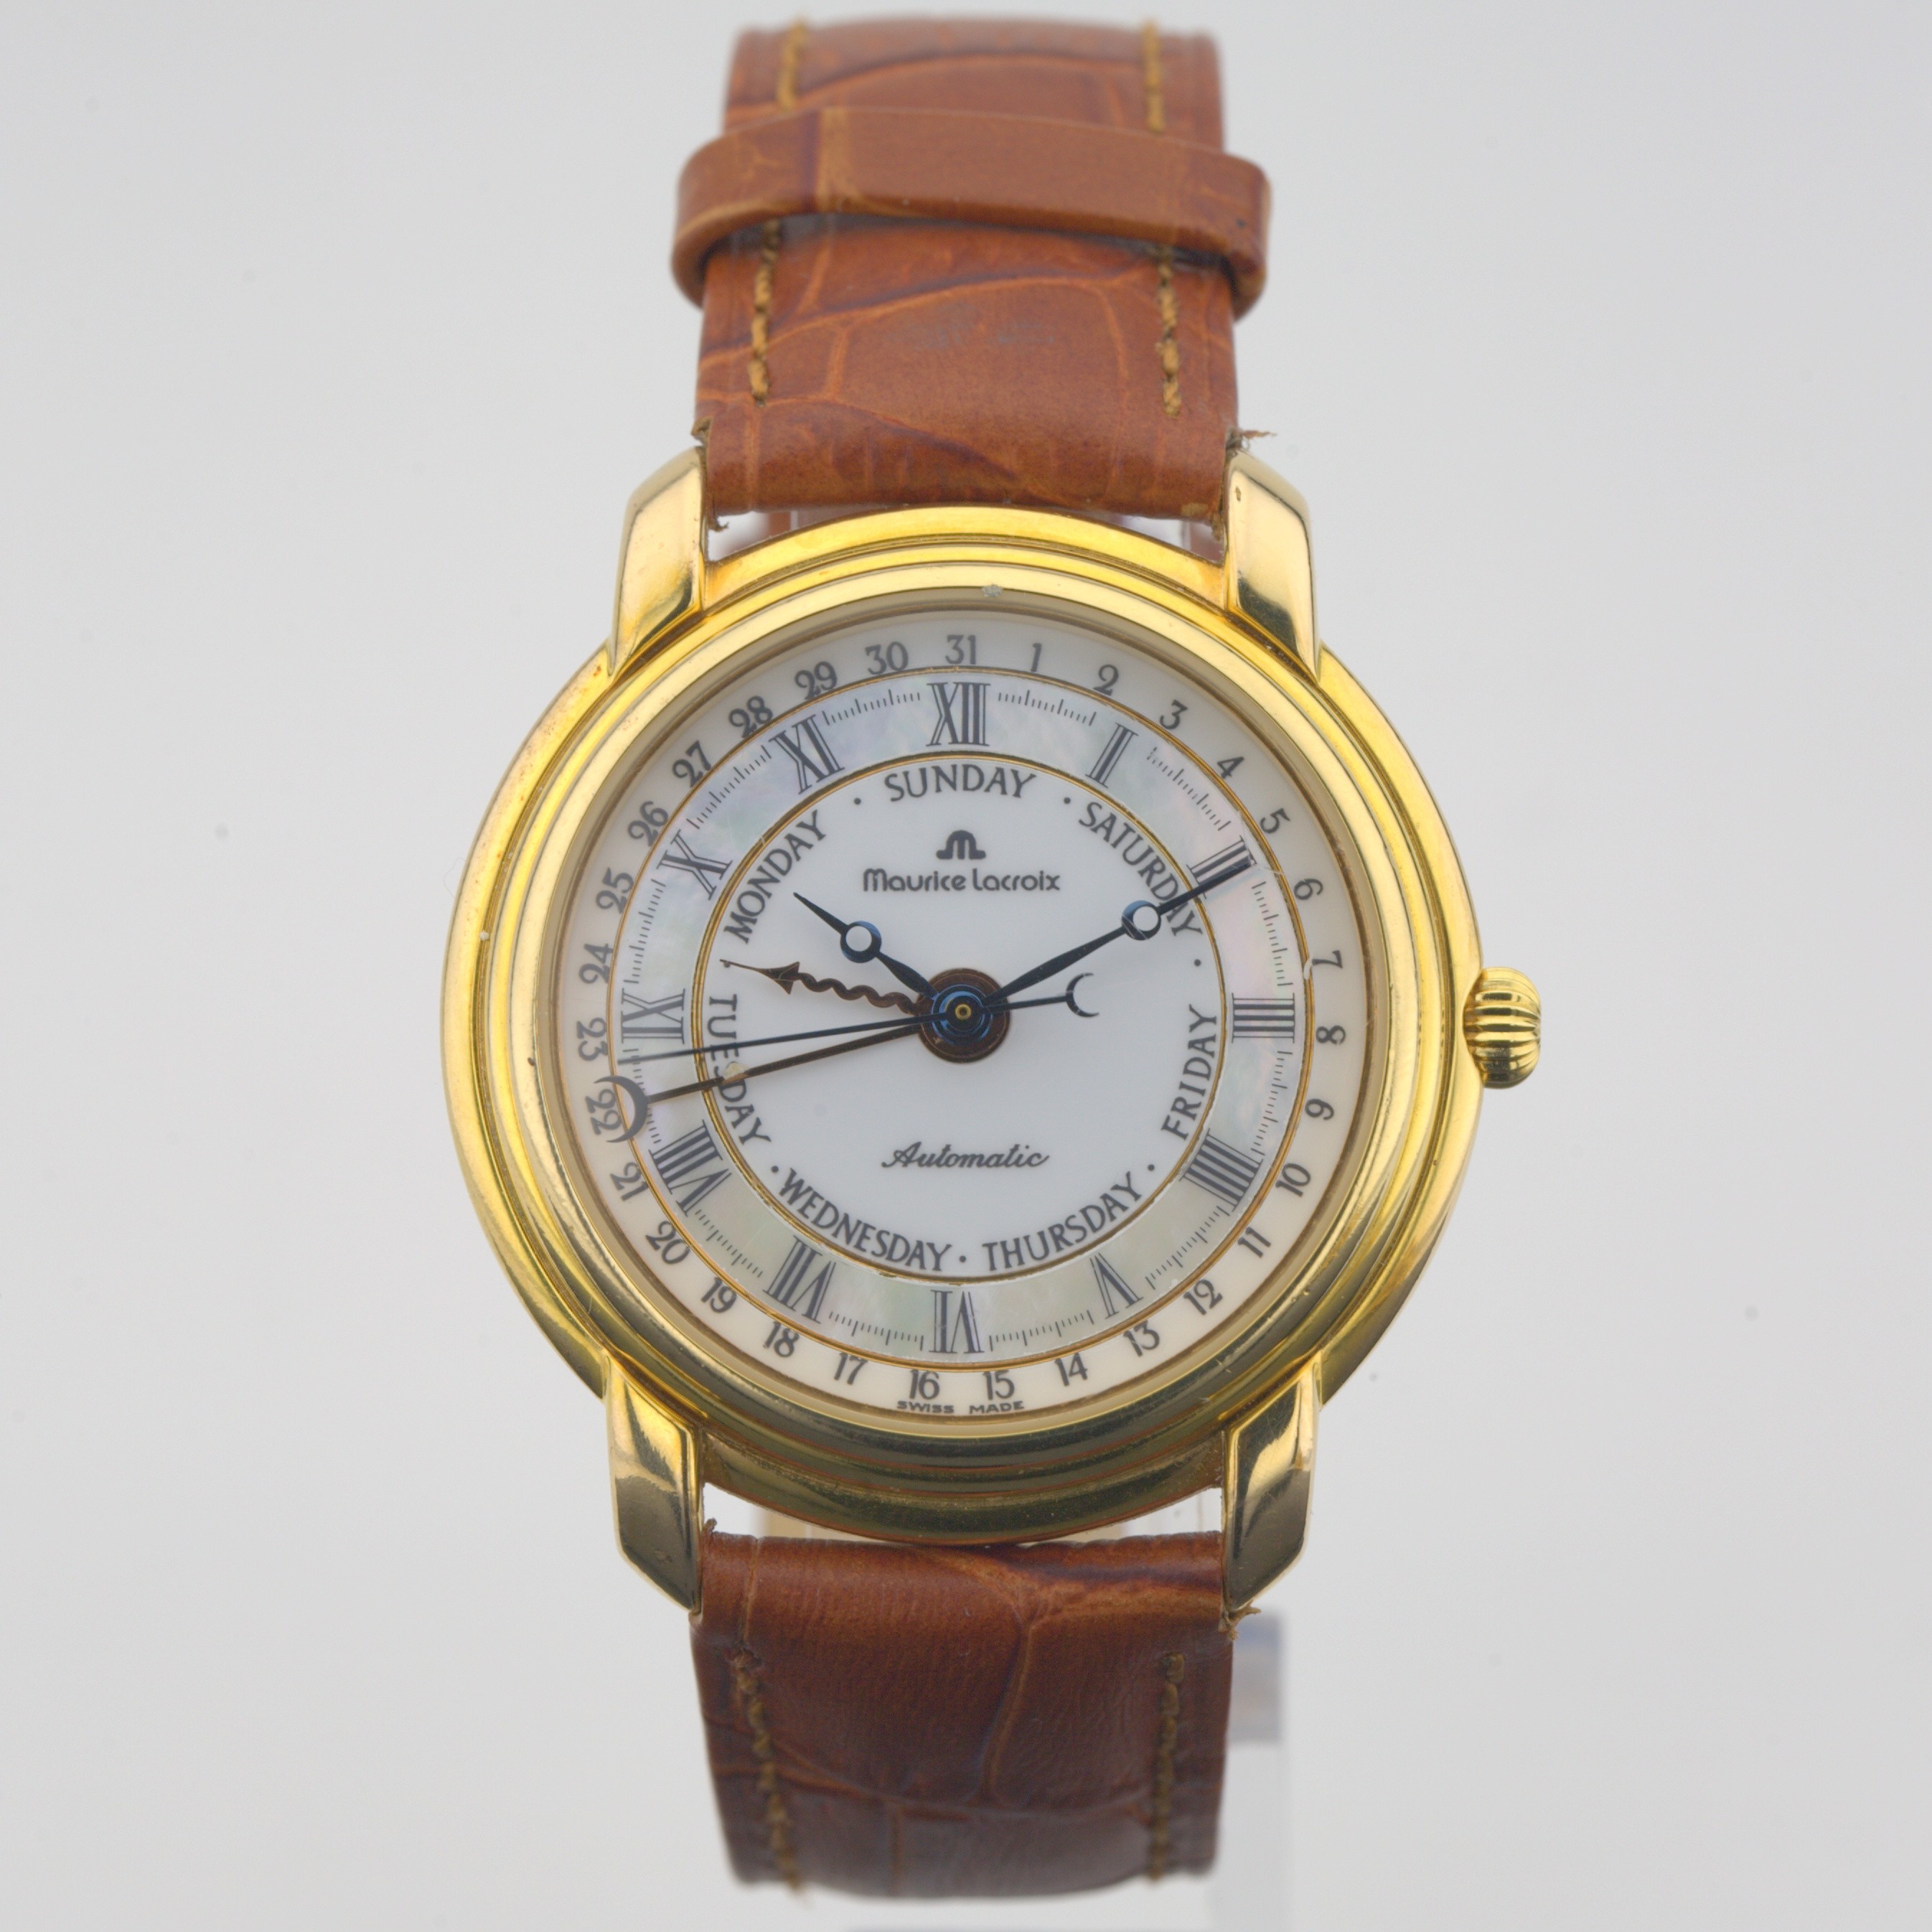 Maurice Lacroix / Masterpiece - Gentlemen's Gold/Steel Wrist Watch - Image 9 of 9